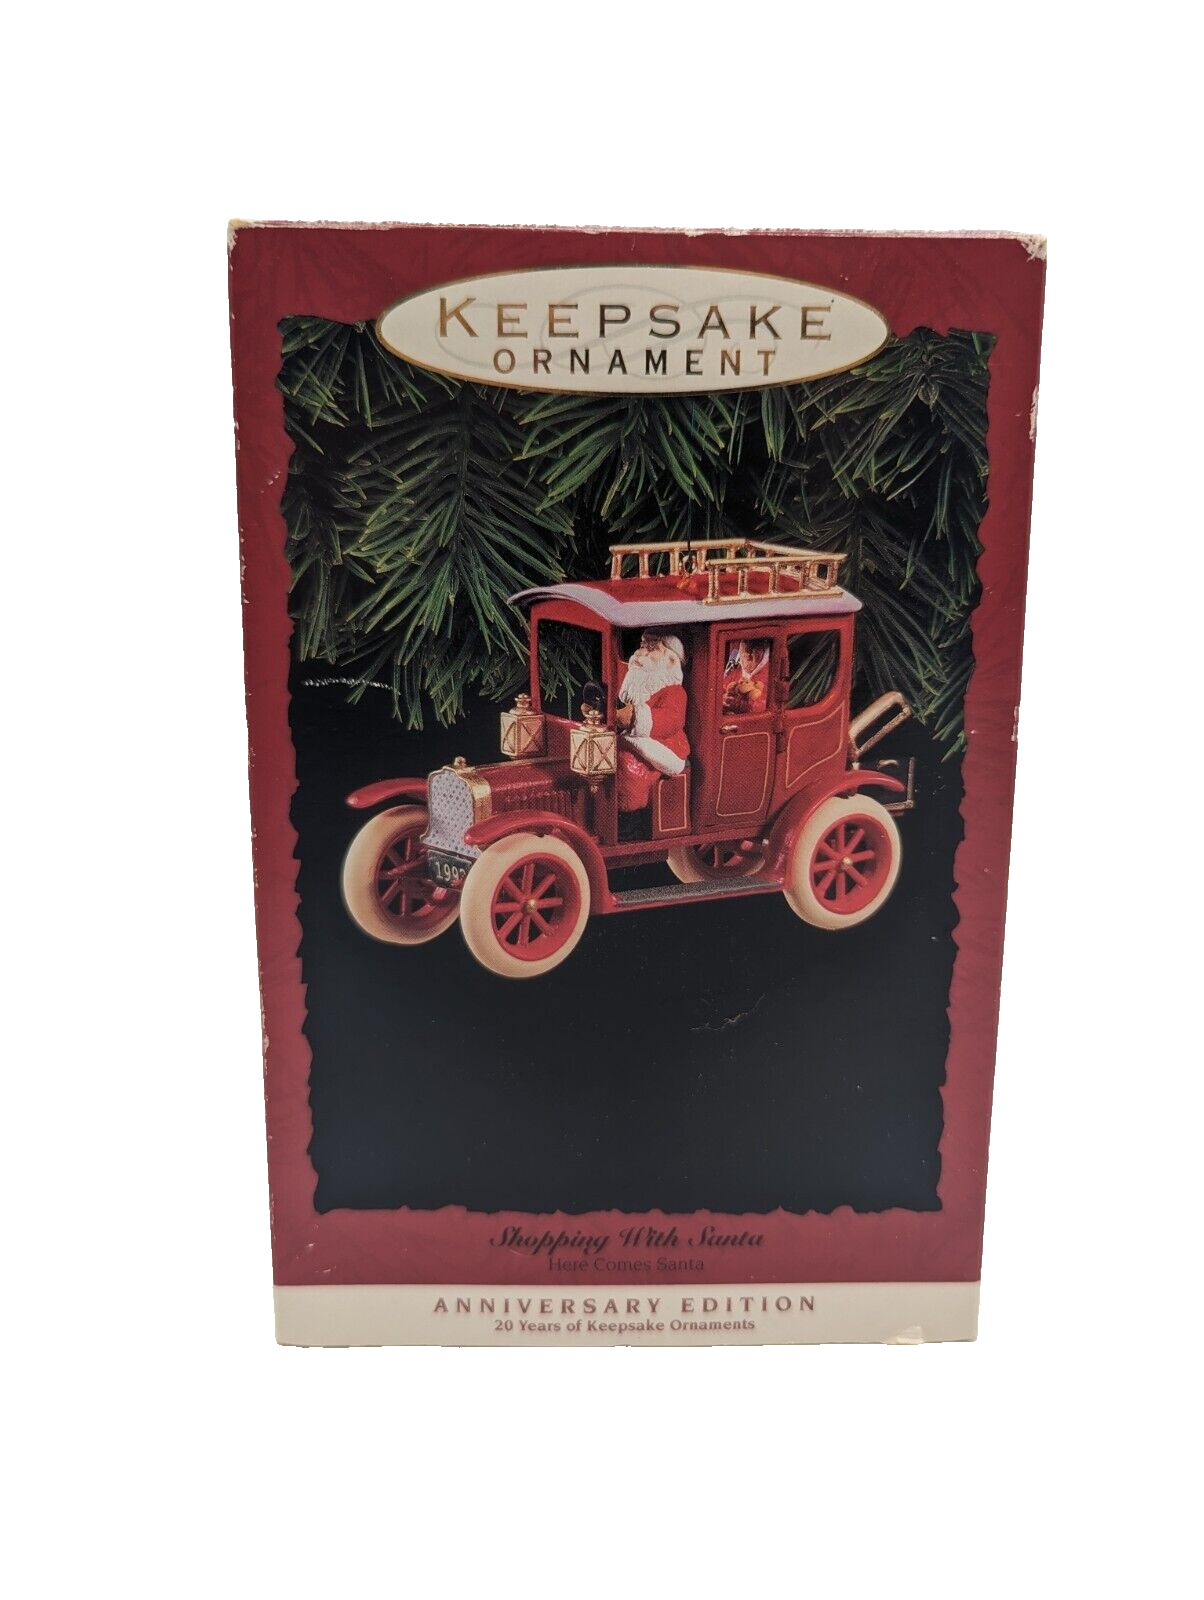 1993 Hallmark Keepsake Ornament Shopping With Santa Here Comes Santa Anniversary